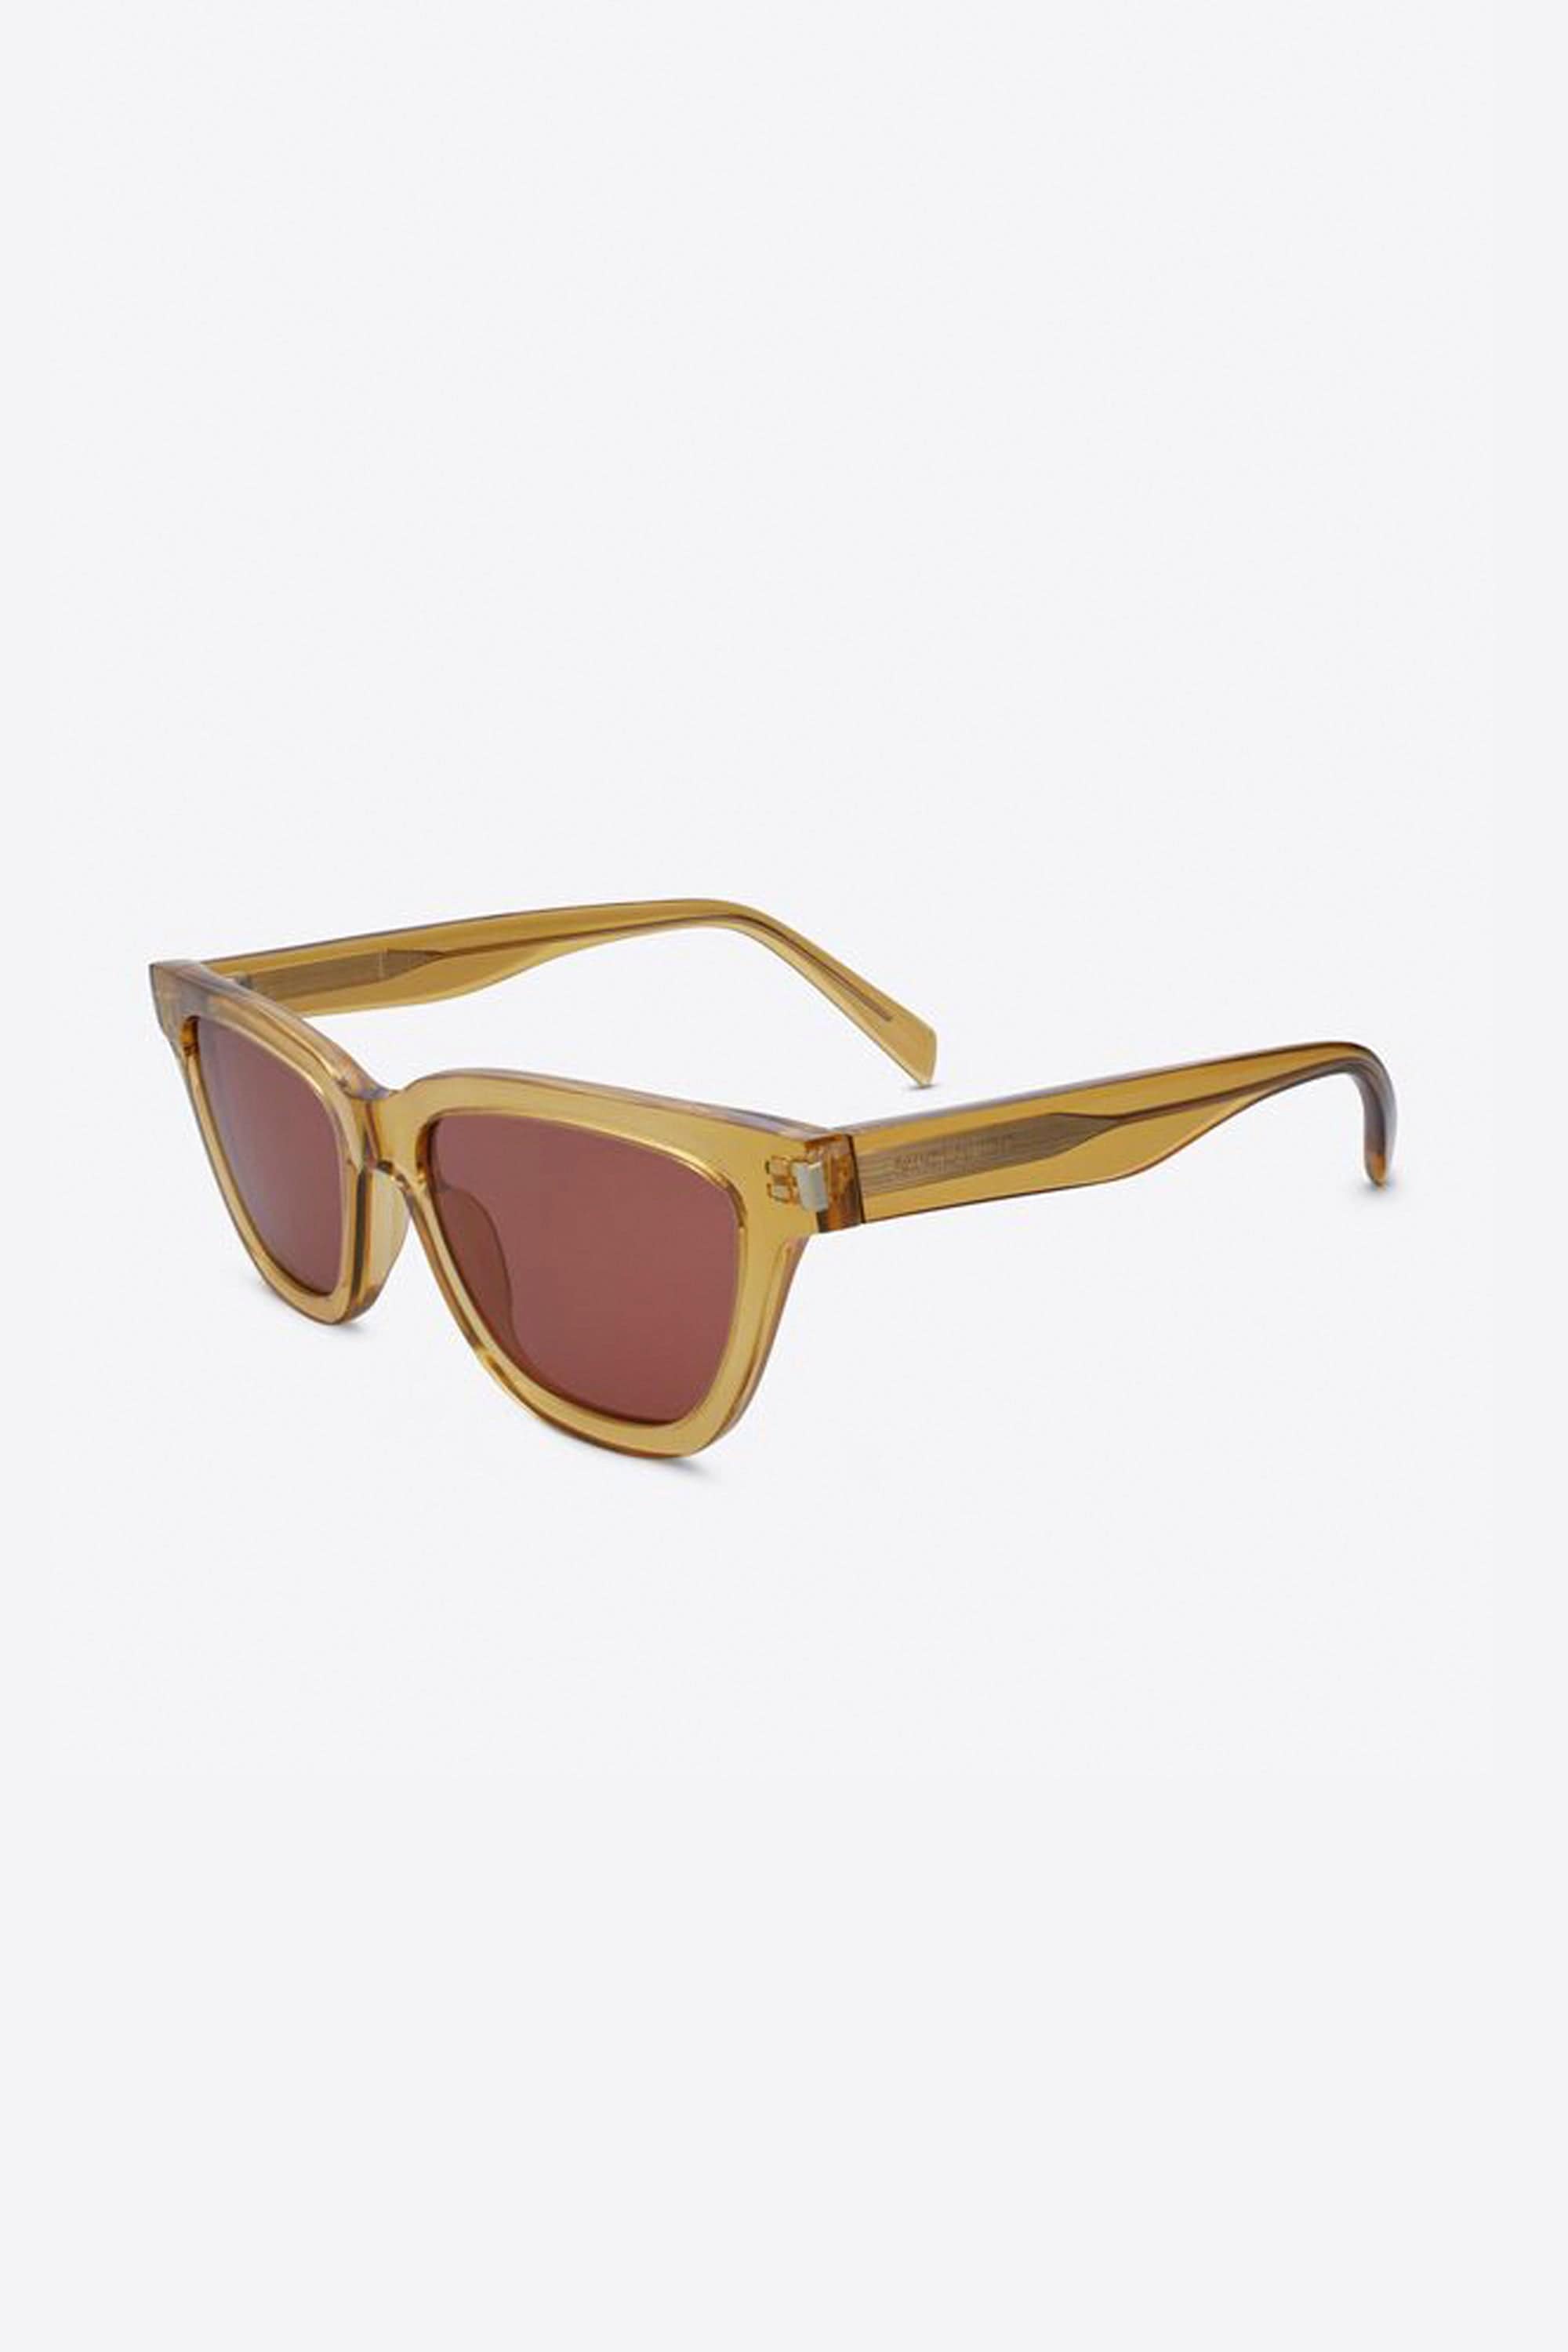 Saint Laurent angular SULPICE cat-eye UNISEX sunglasses with yellow lenses - Eyewear Club